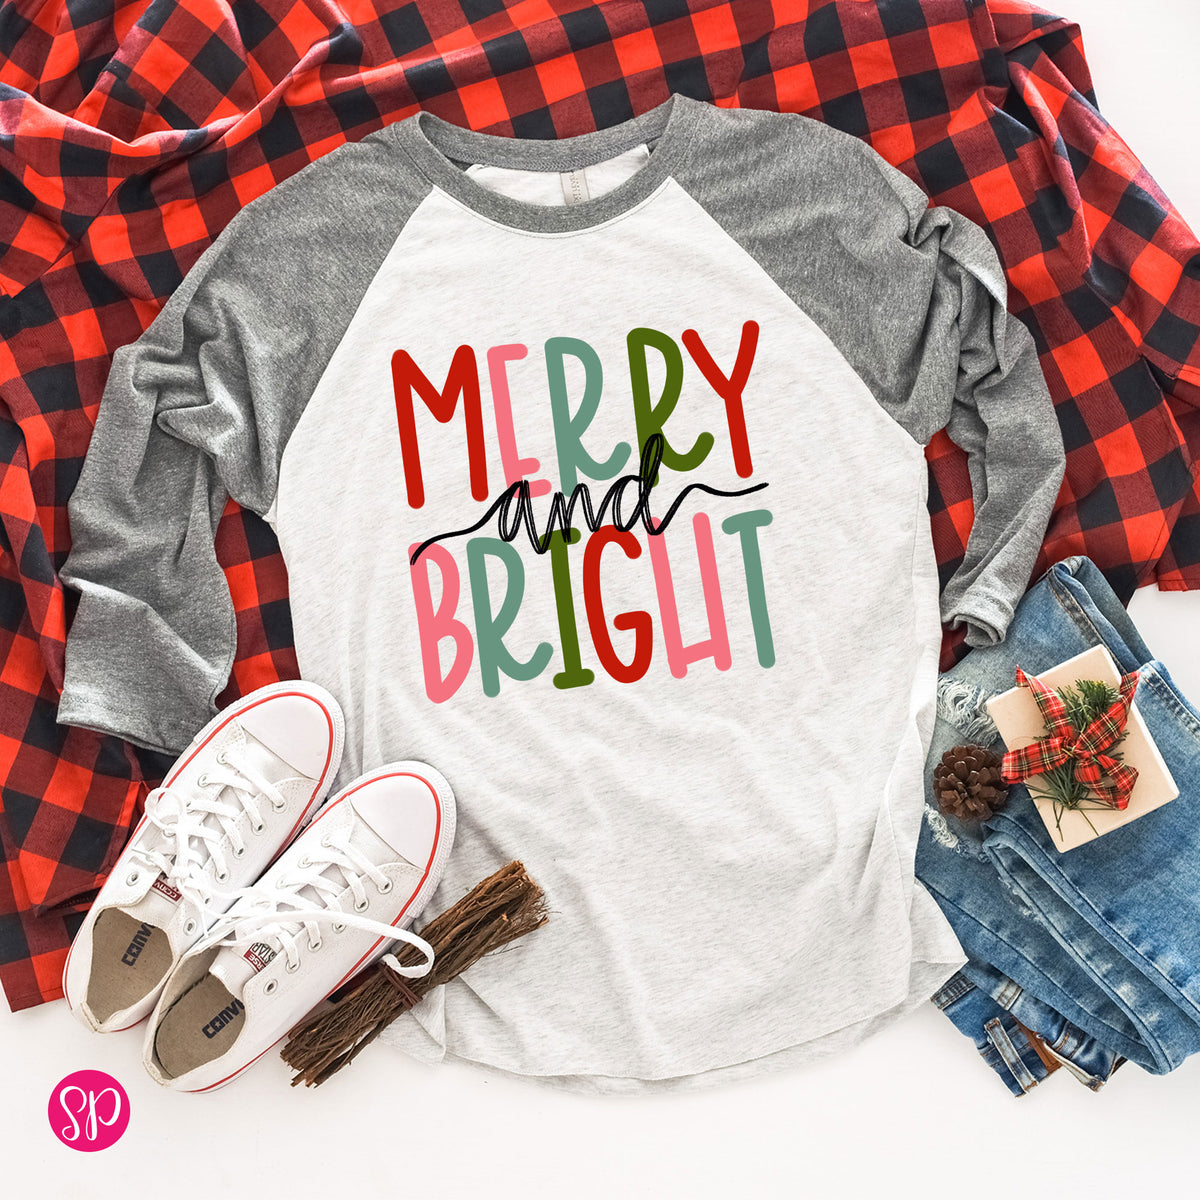 Merry and Bright Christmas Holiday Pajama Raglan Graphic Tee Shirt for Women